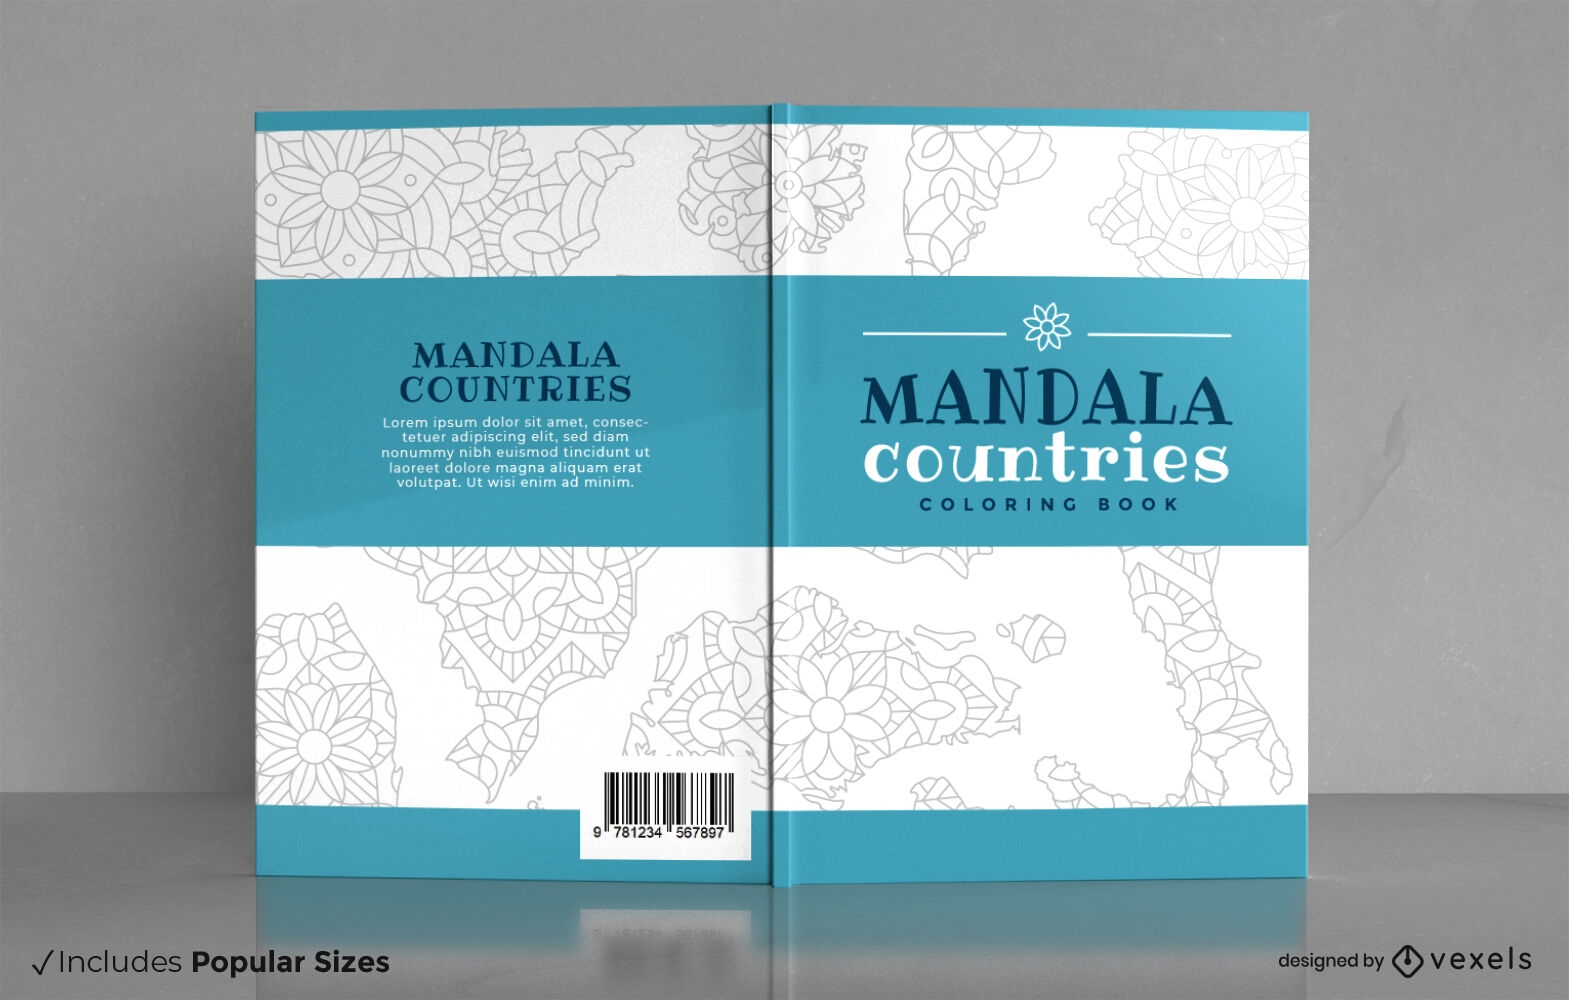 Diseño de portada de libro para colorear de países mandala